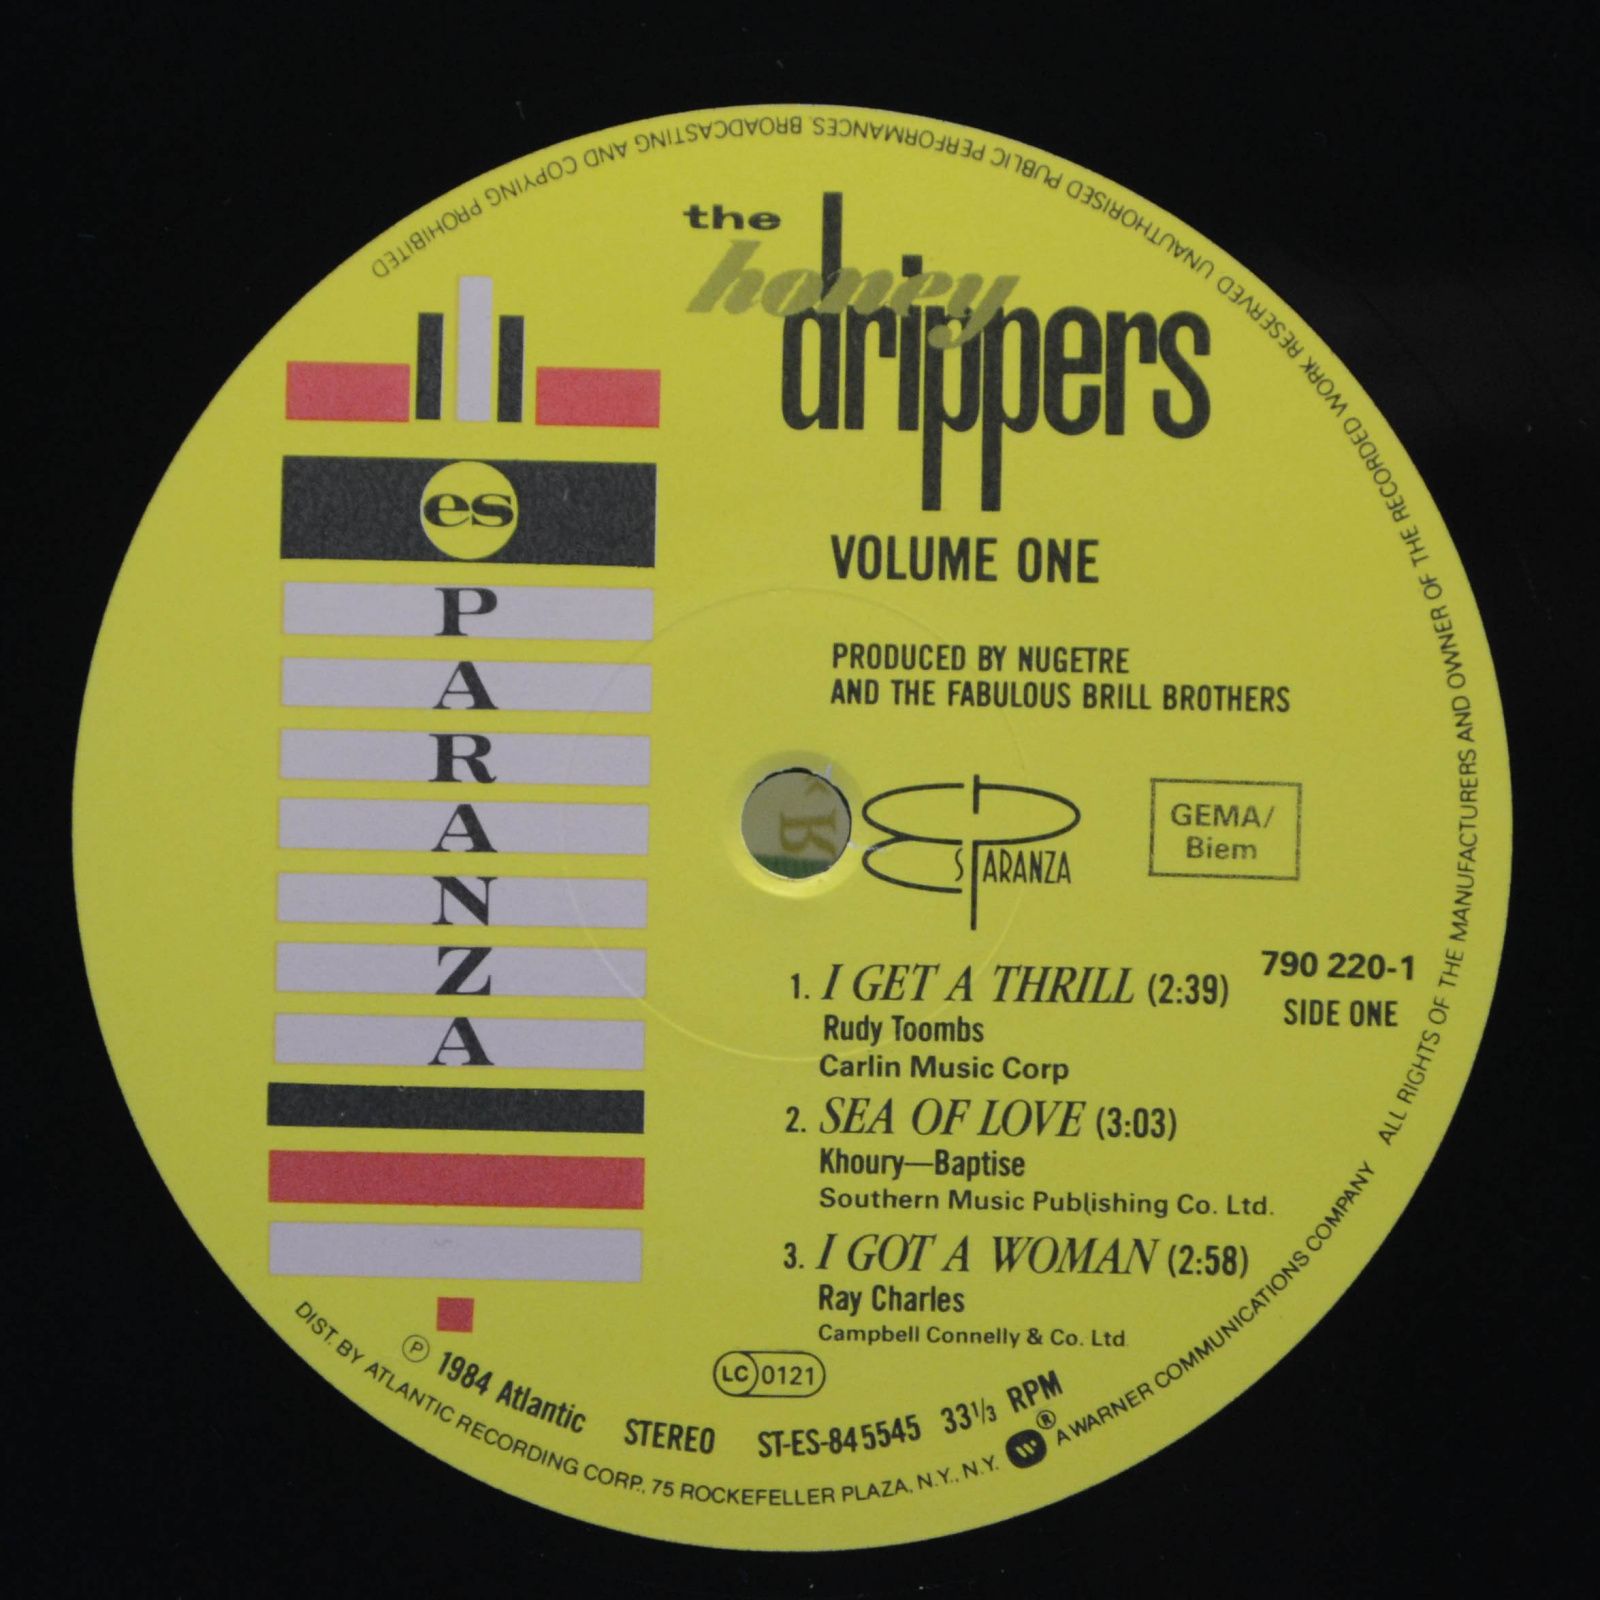 Honeydrippers — Volume One, 1984